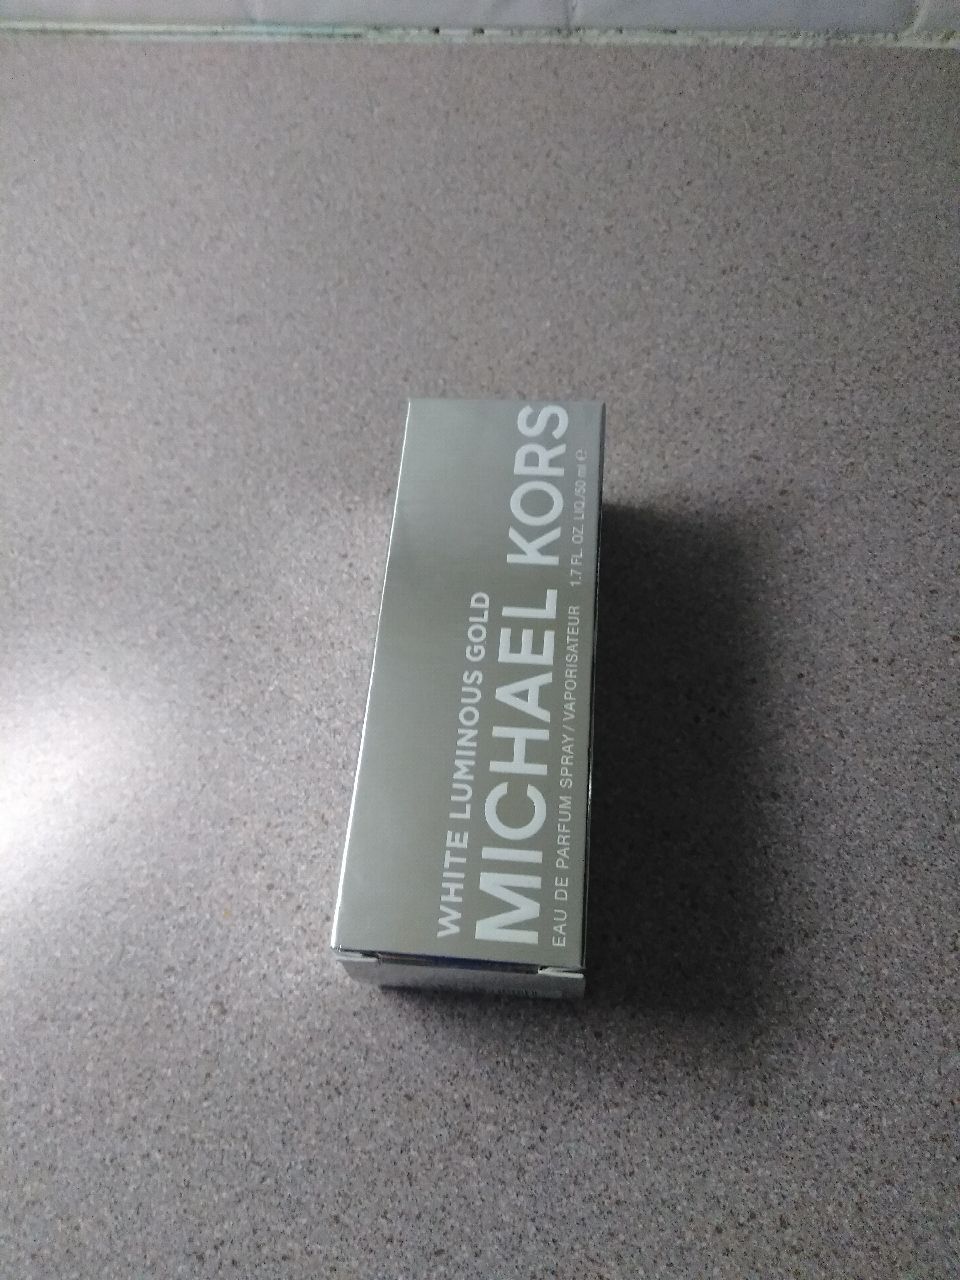 Michael Kors new perfume